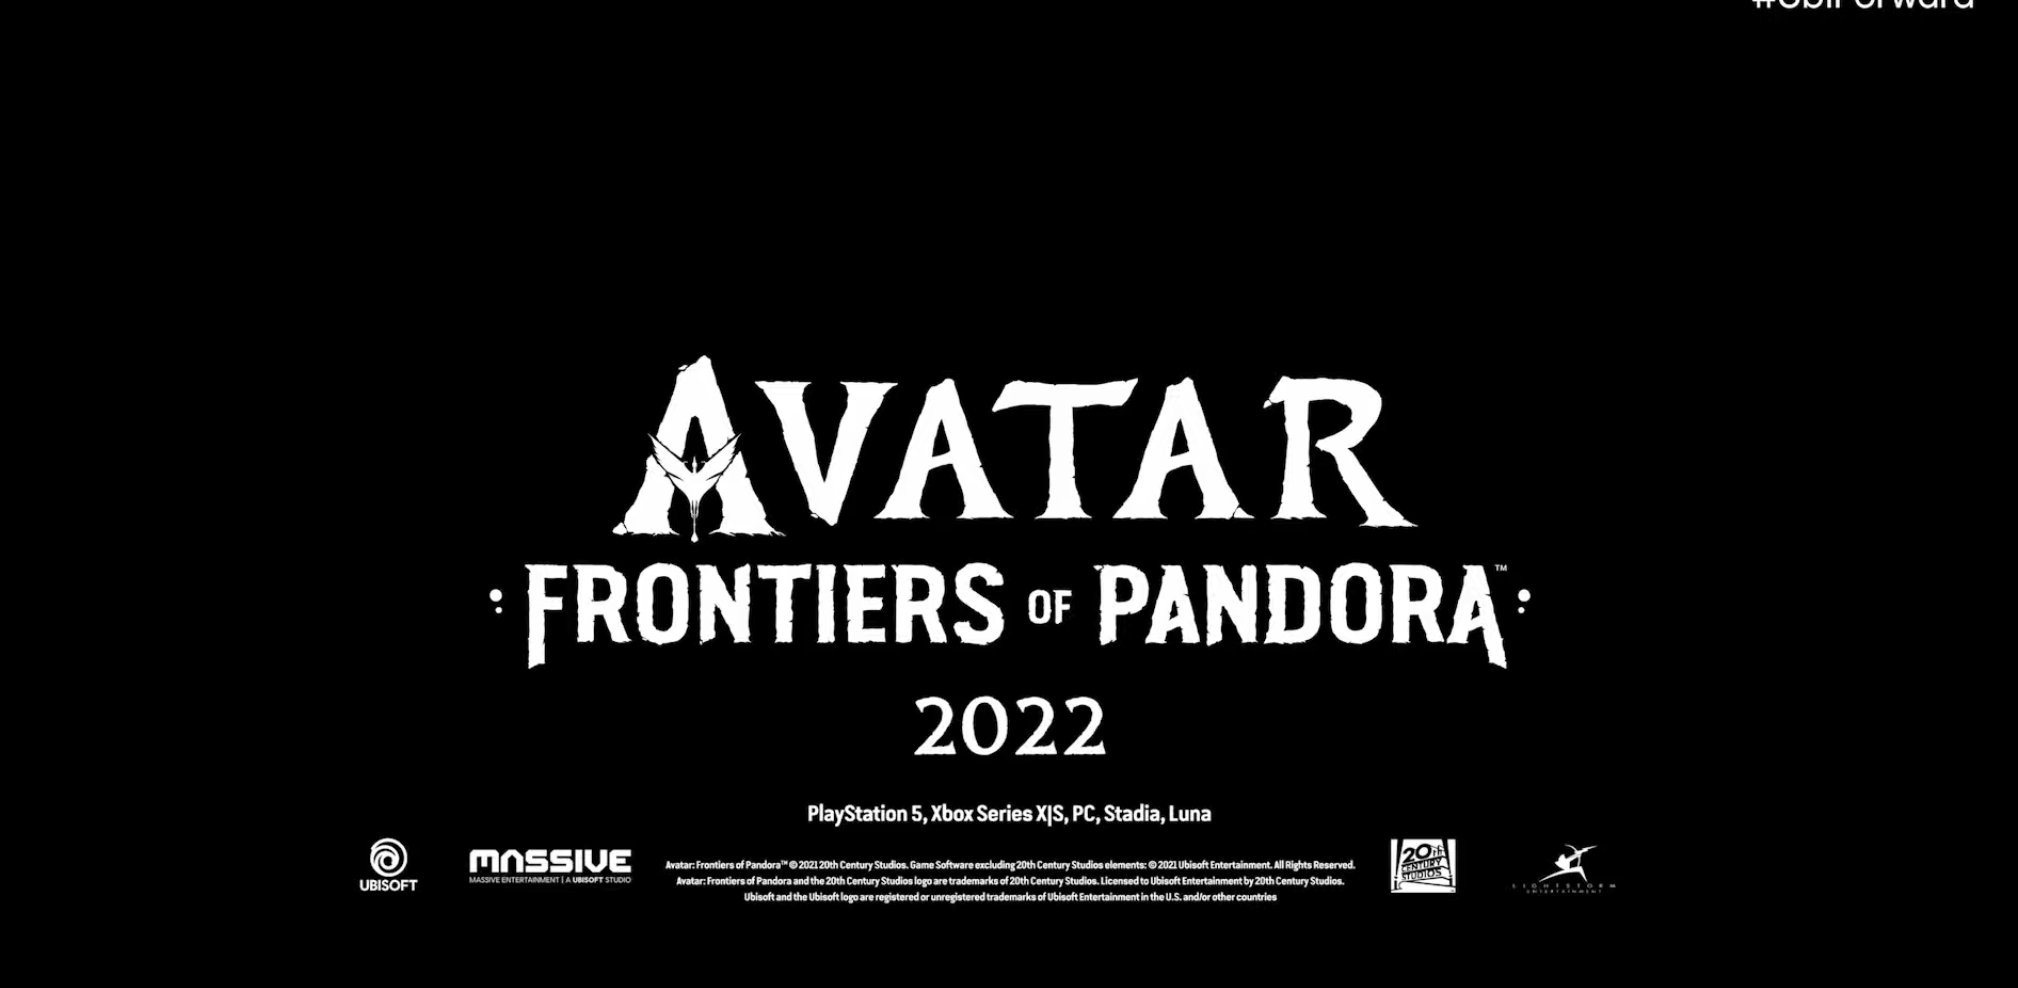 download avatar frontiers of pandora xbox